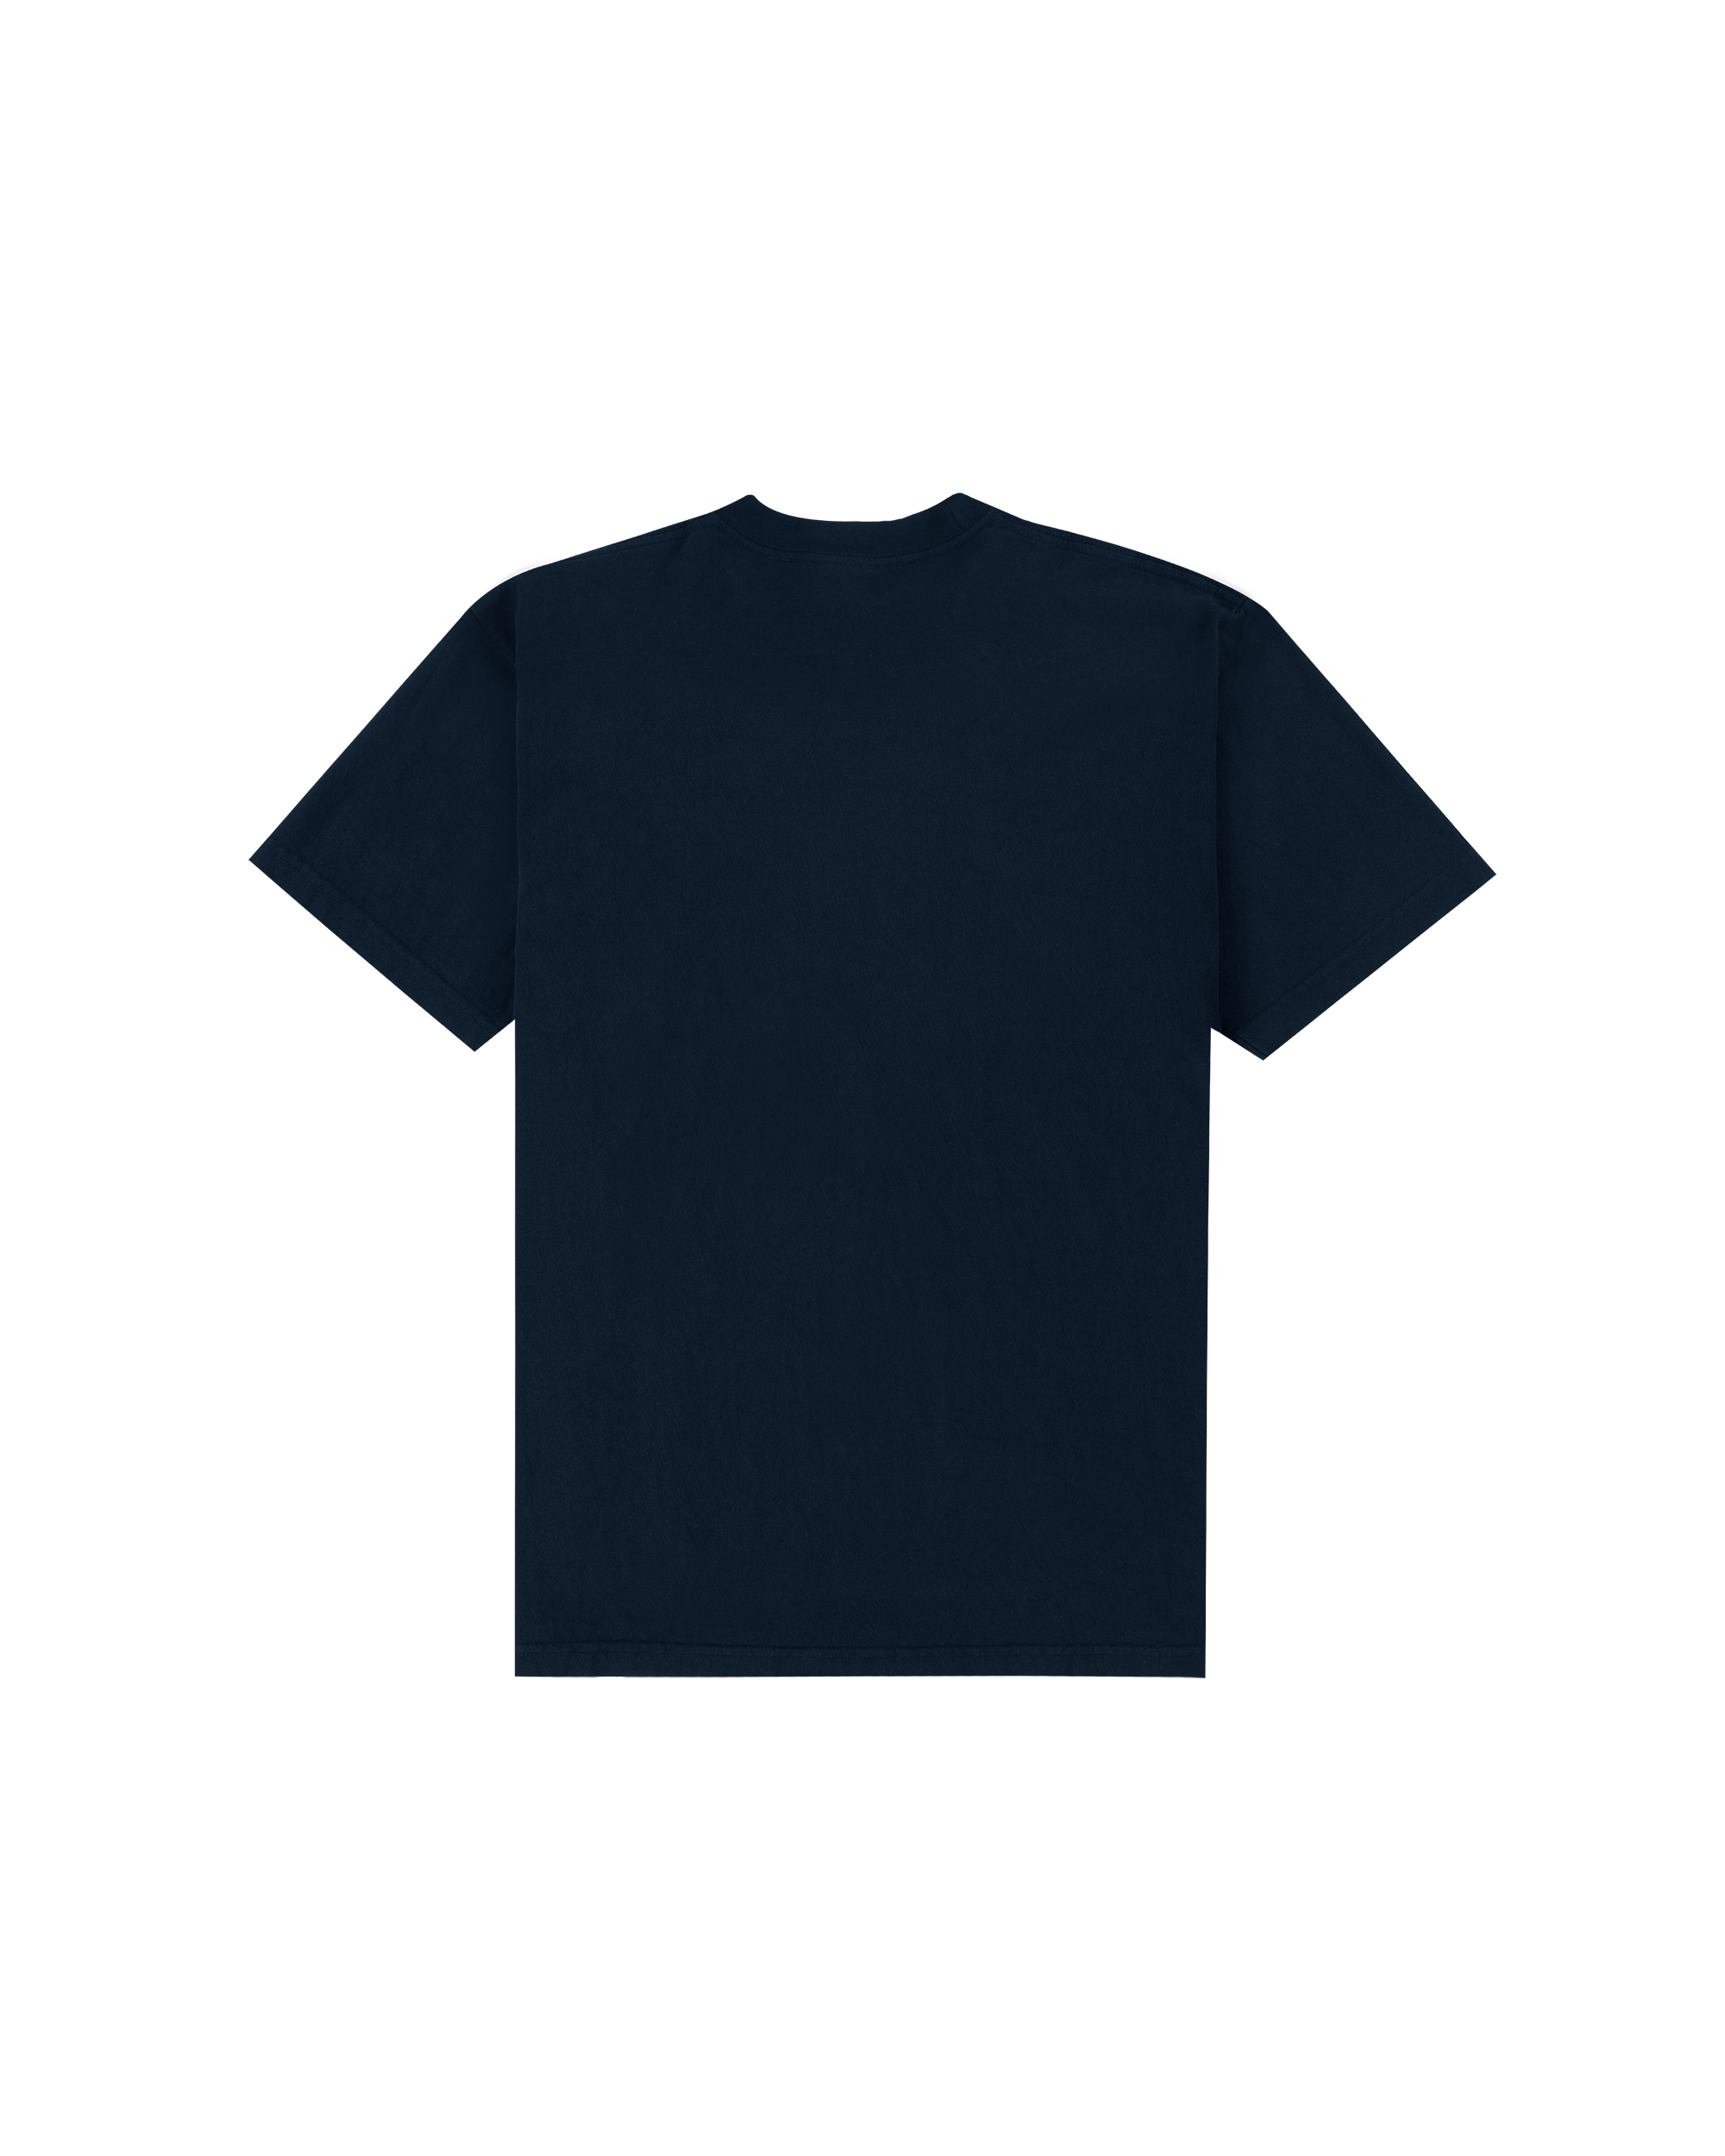 Quality Sound T-shirt - Navy